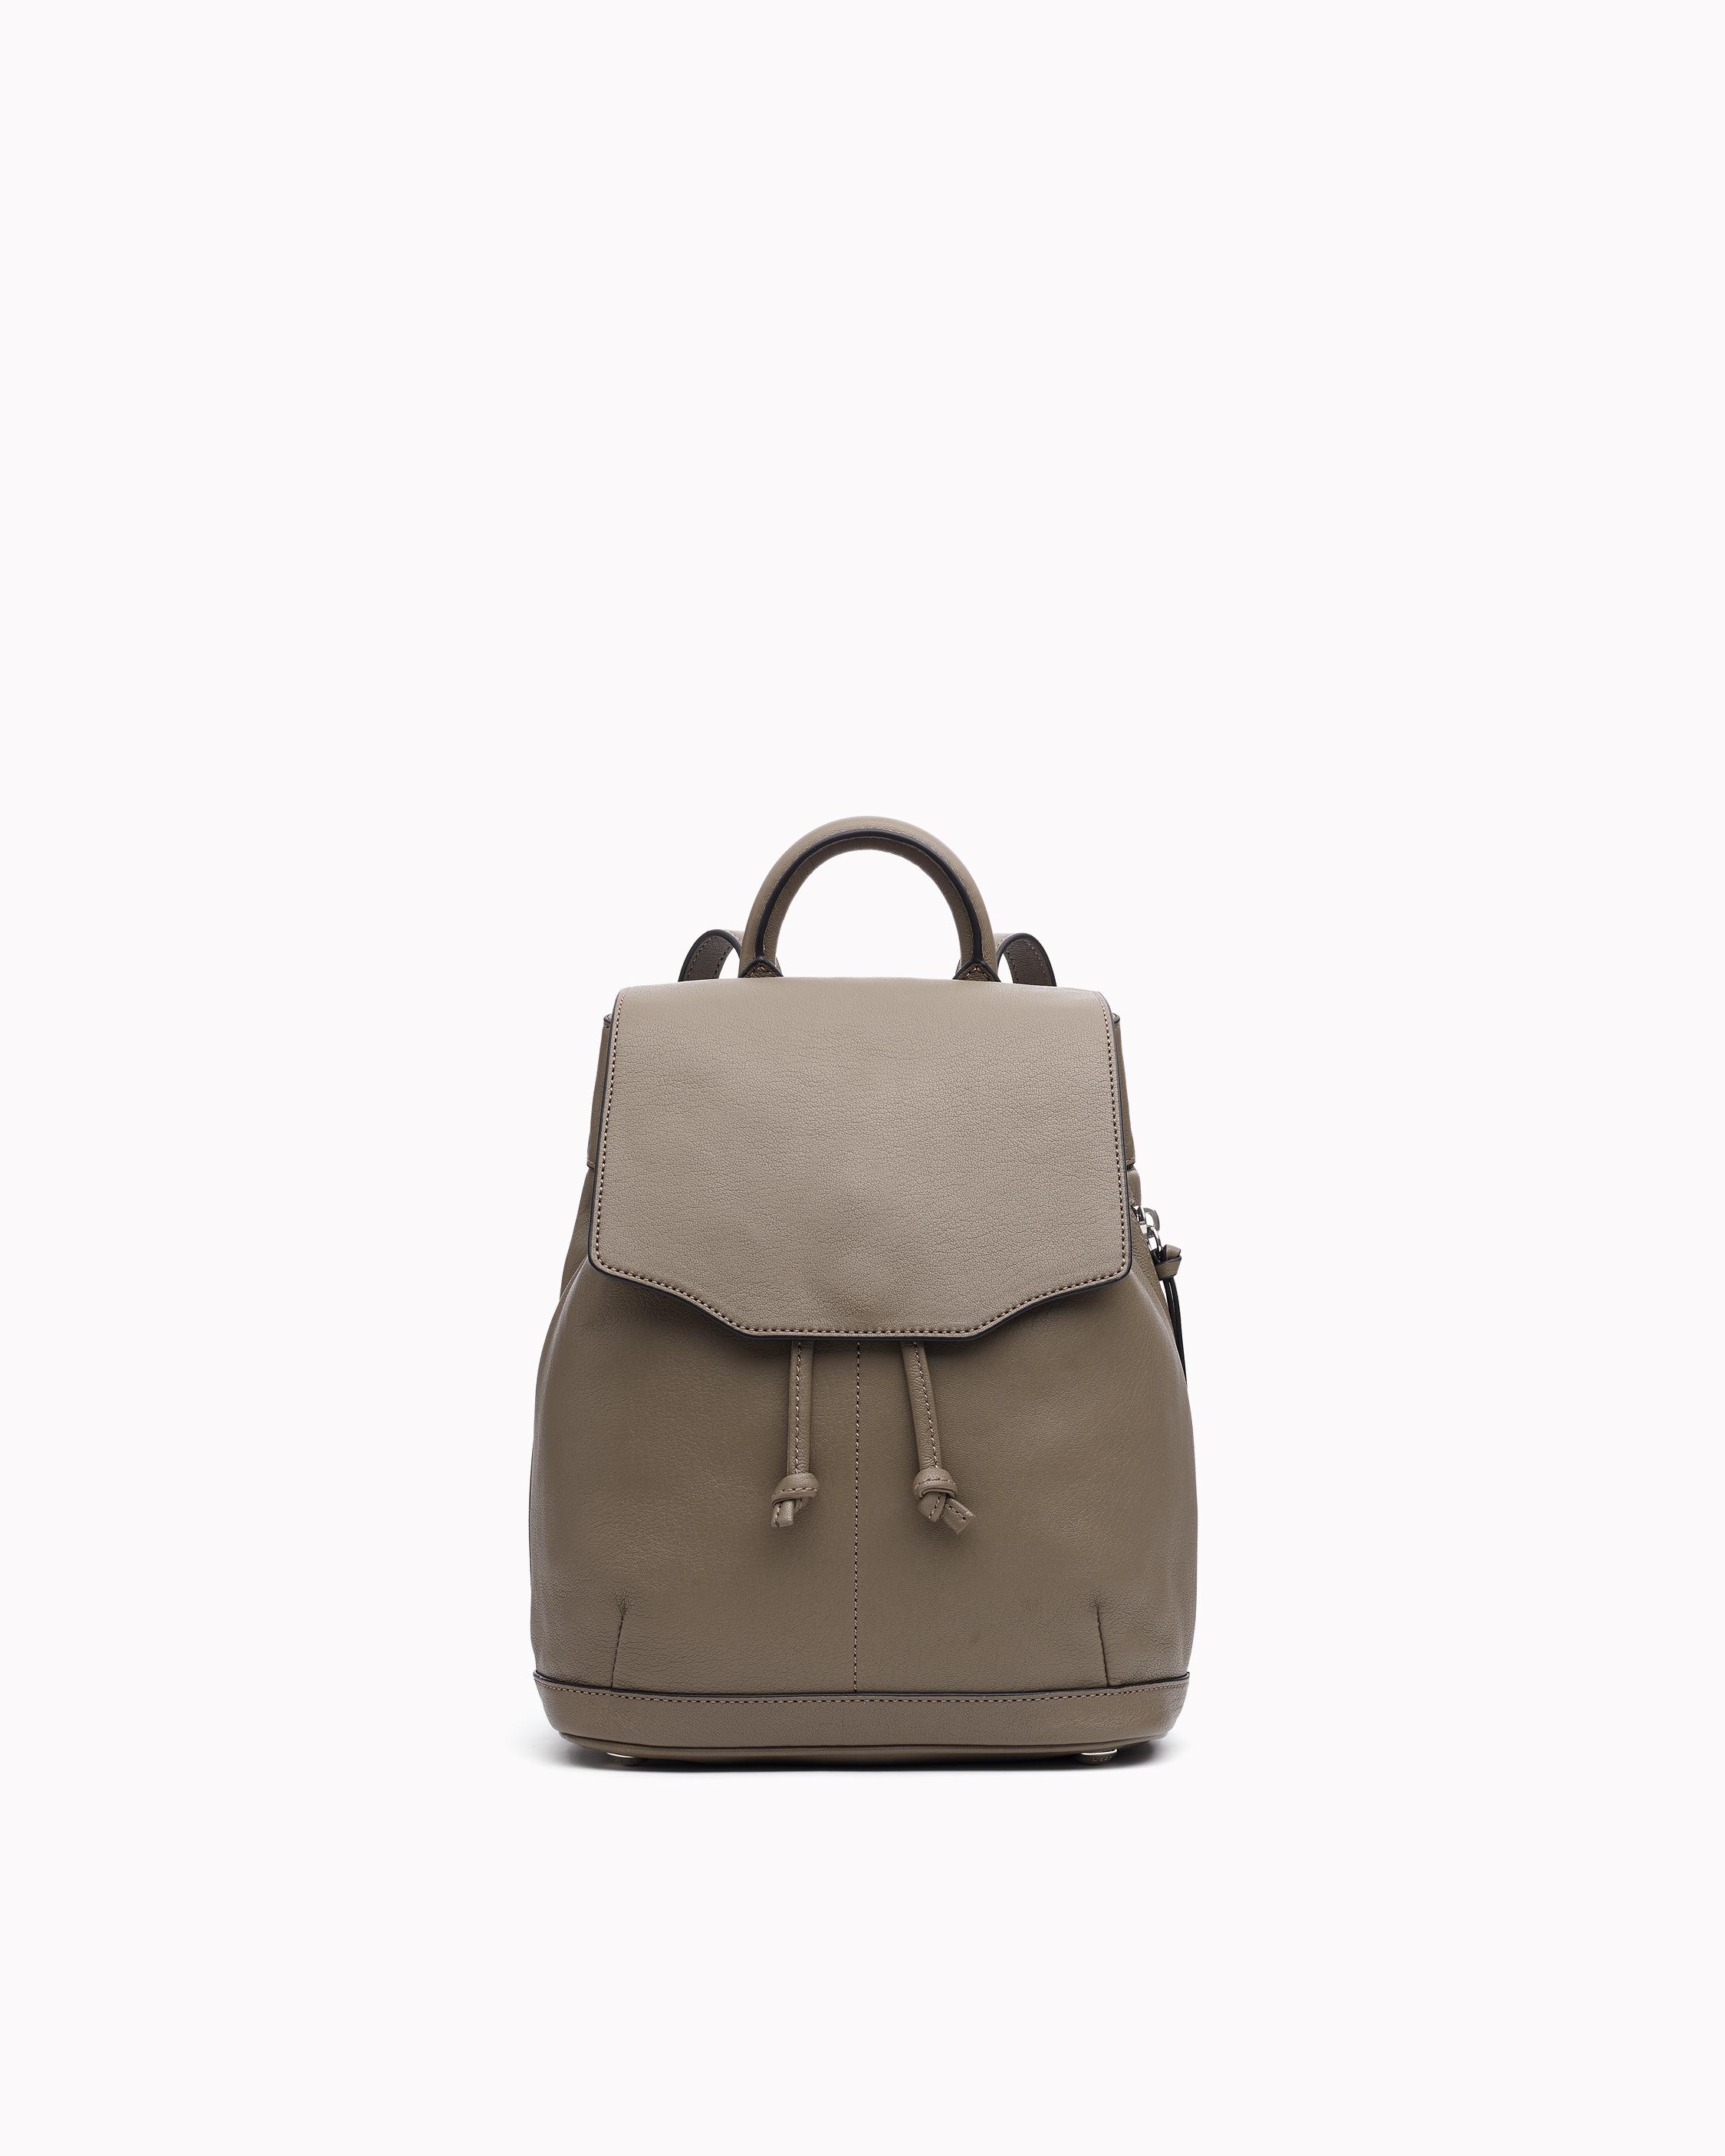 Handbags & Backpacks with Urban Style | rag & bone